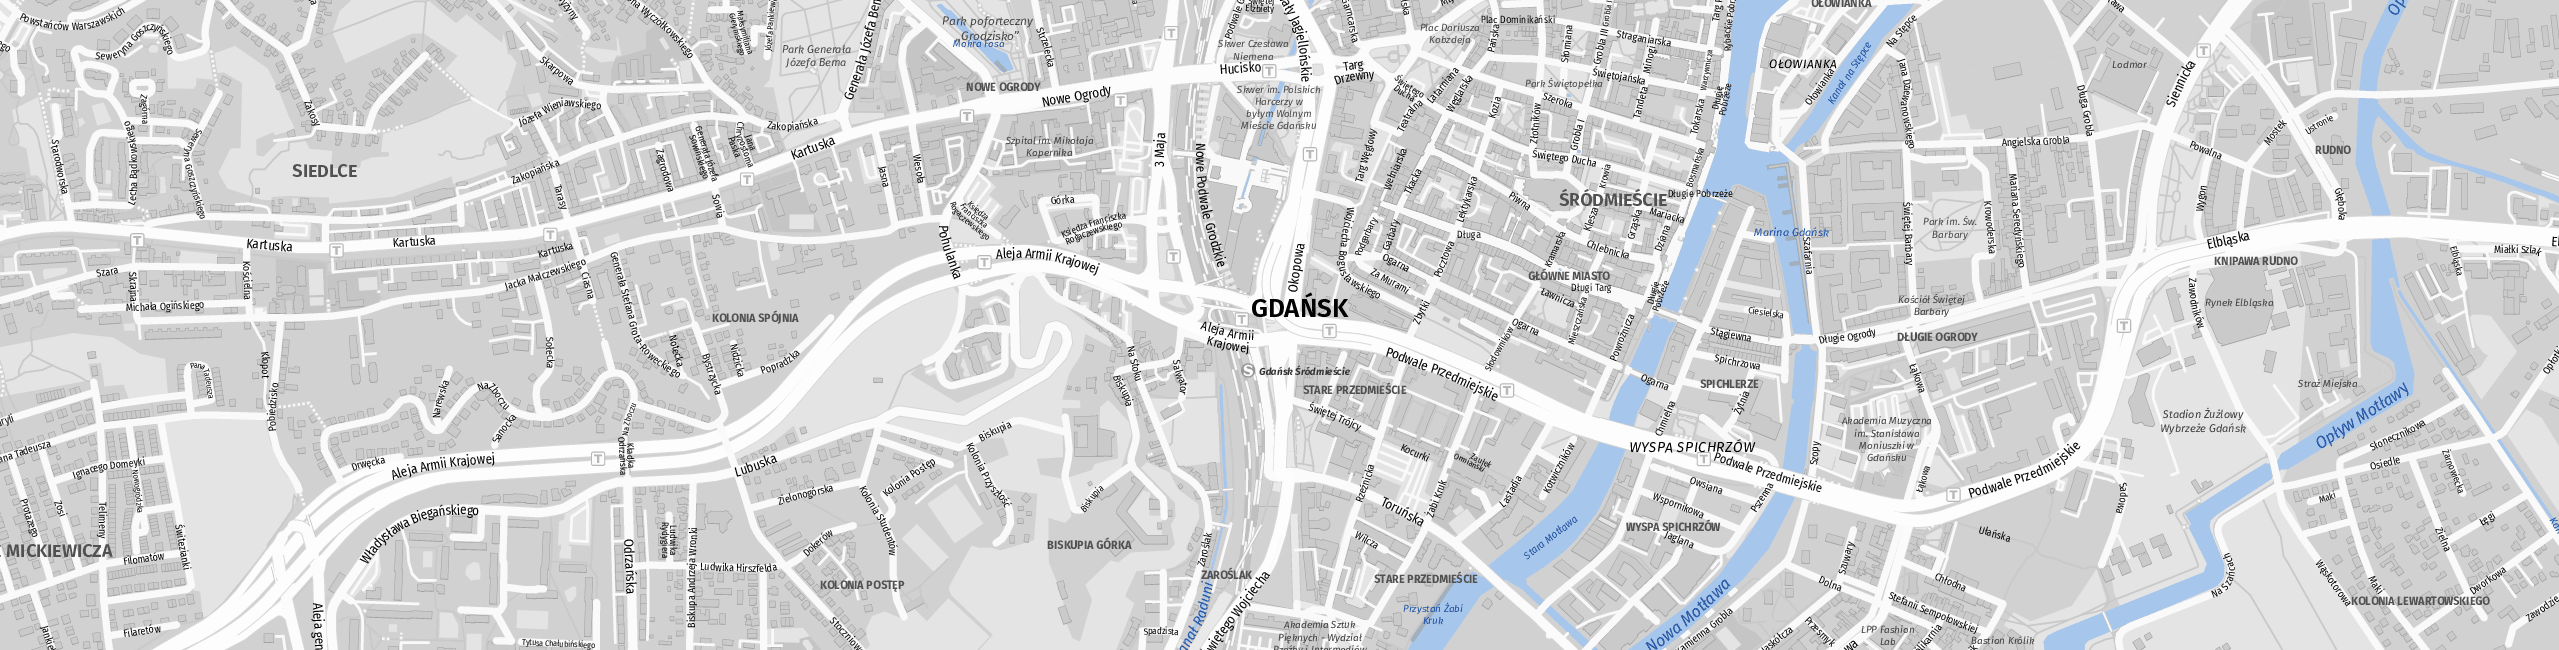 Stadtplan Gdańsk zum Downloaden.